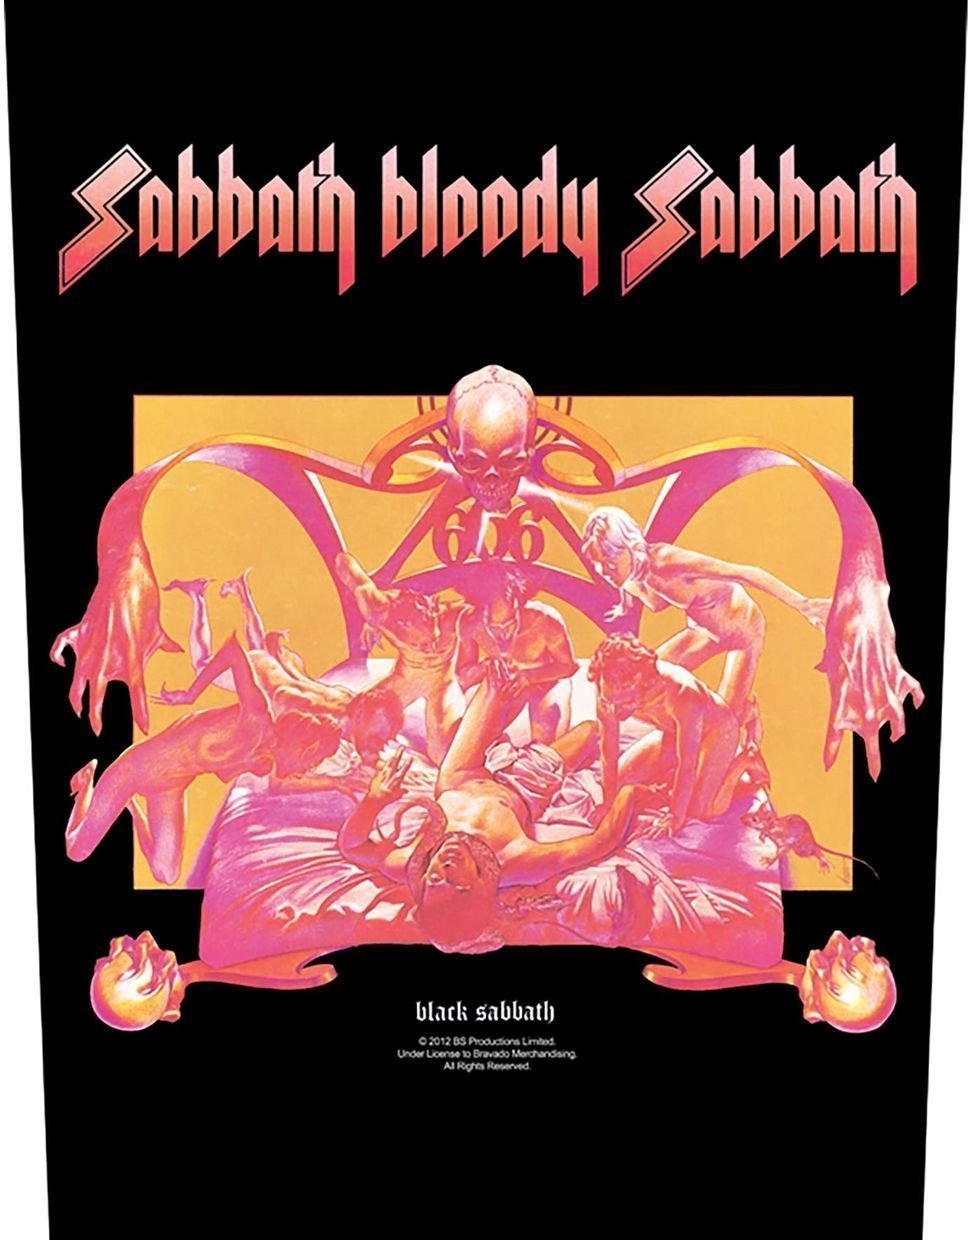 Lapp Black Sabbath Sabbath Bloody Sabbath Lapp